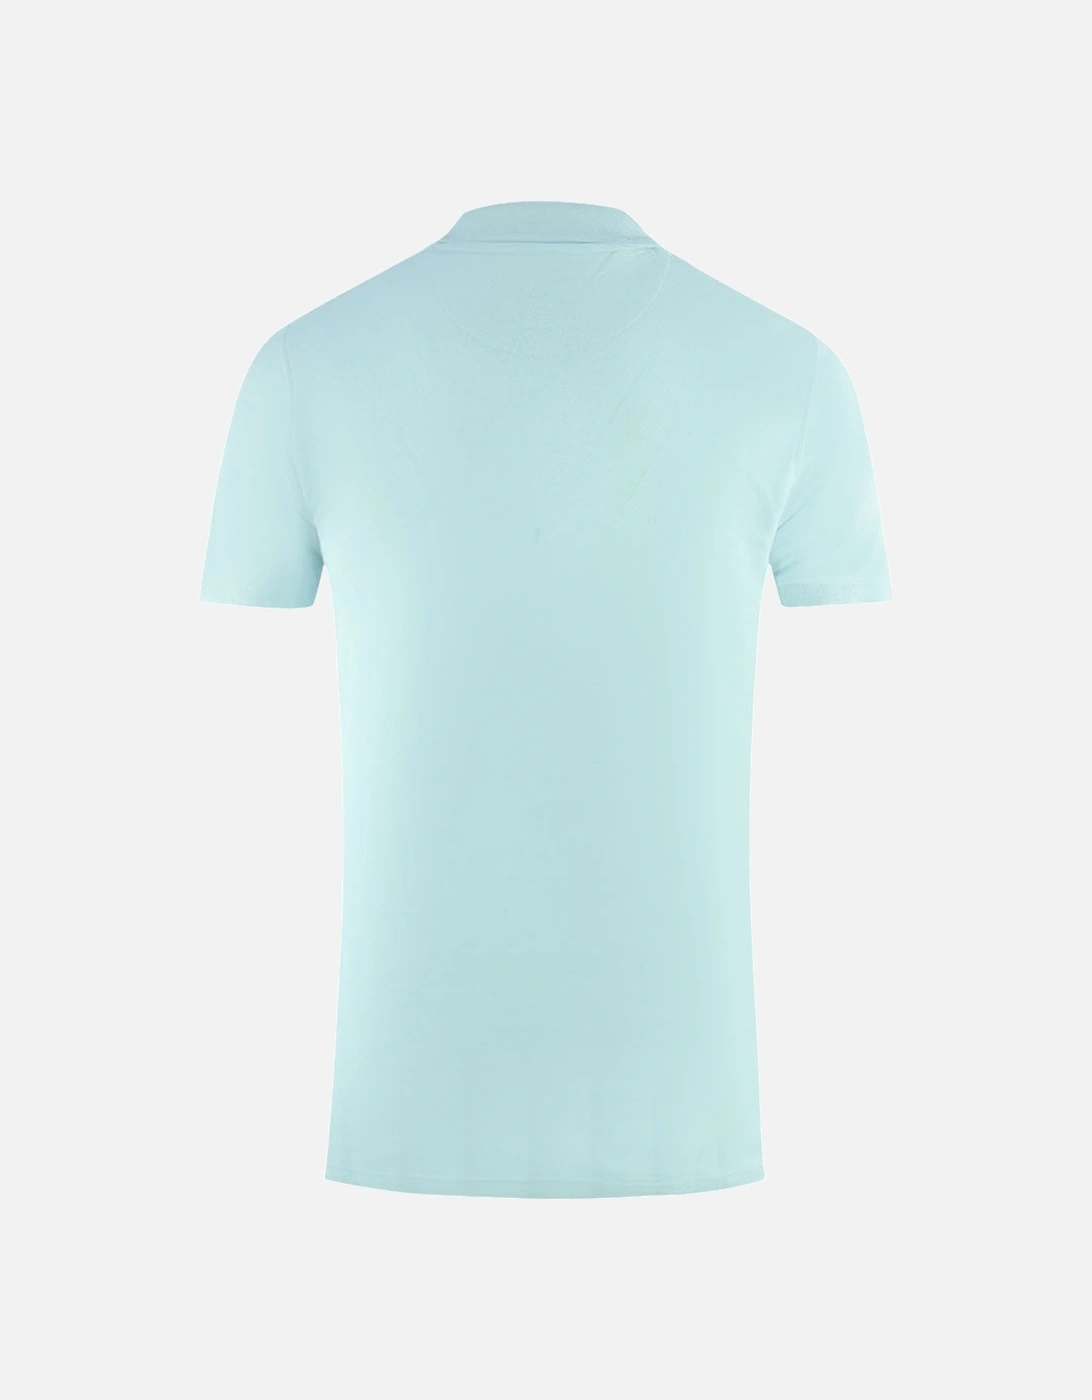 London Crest Light Blue Polo Shirt